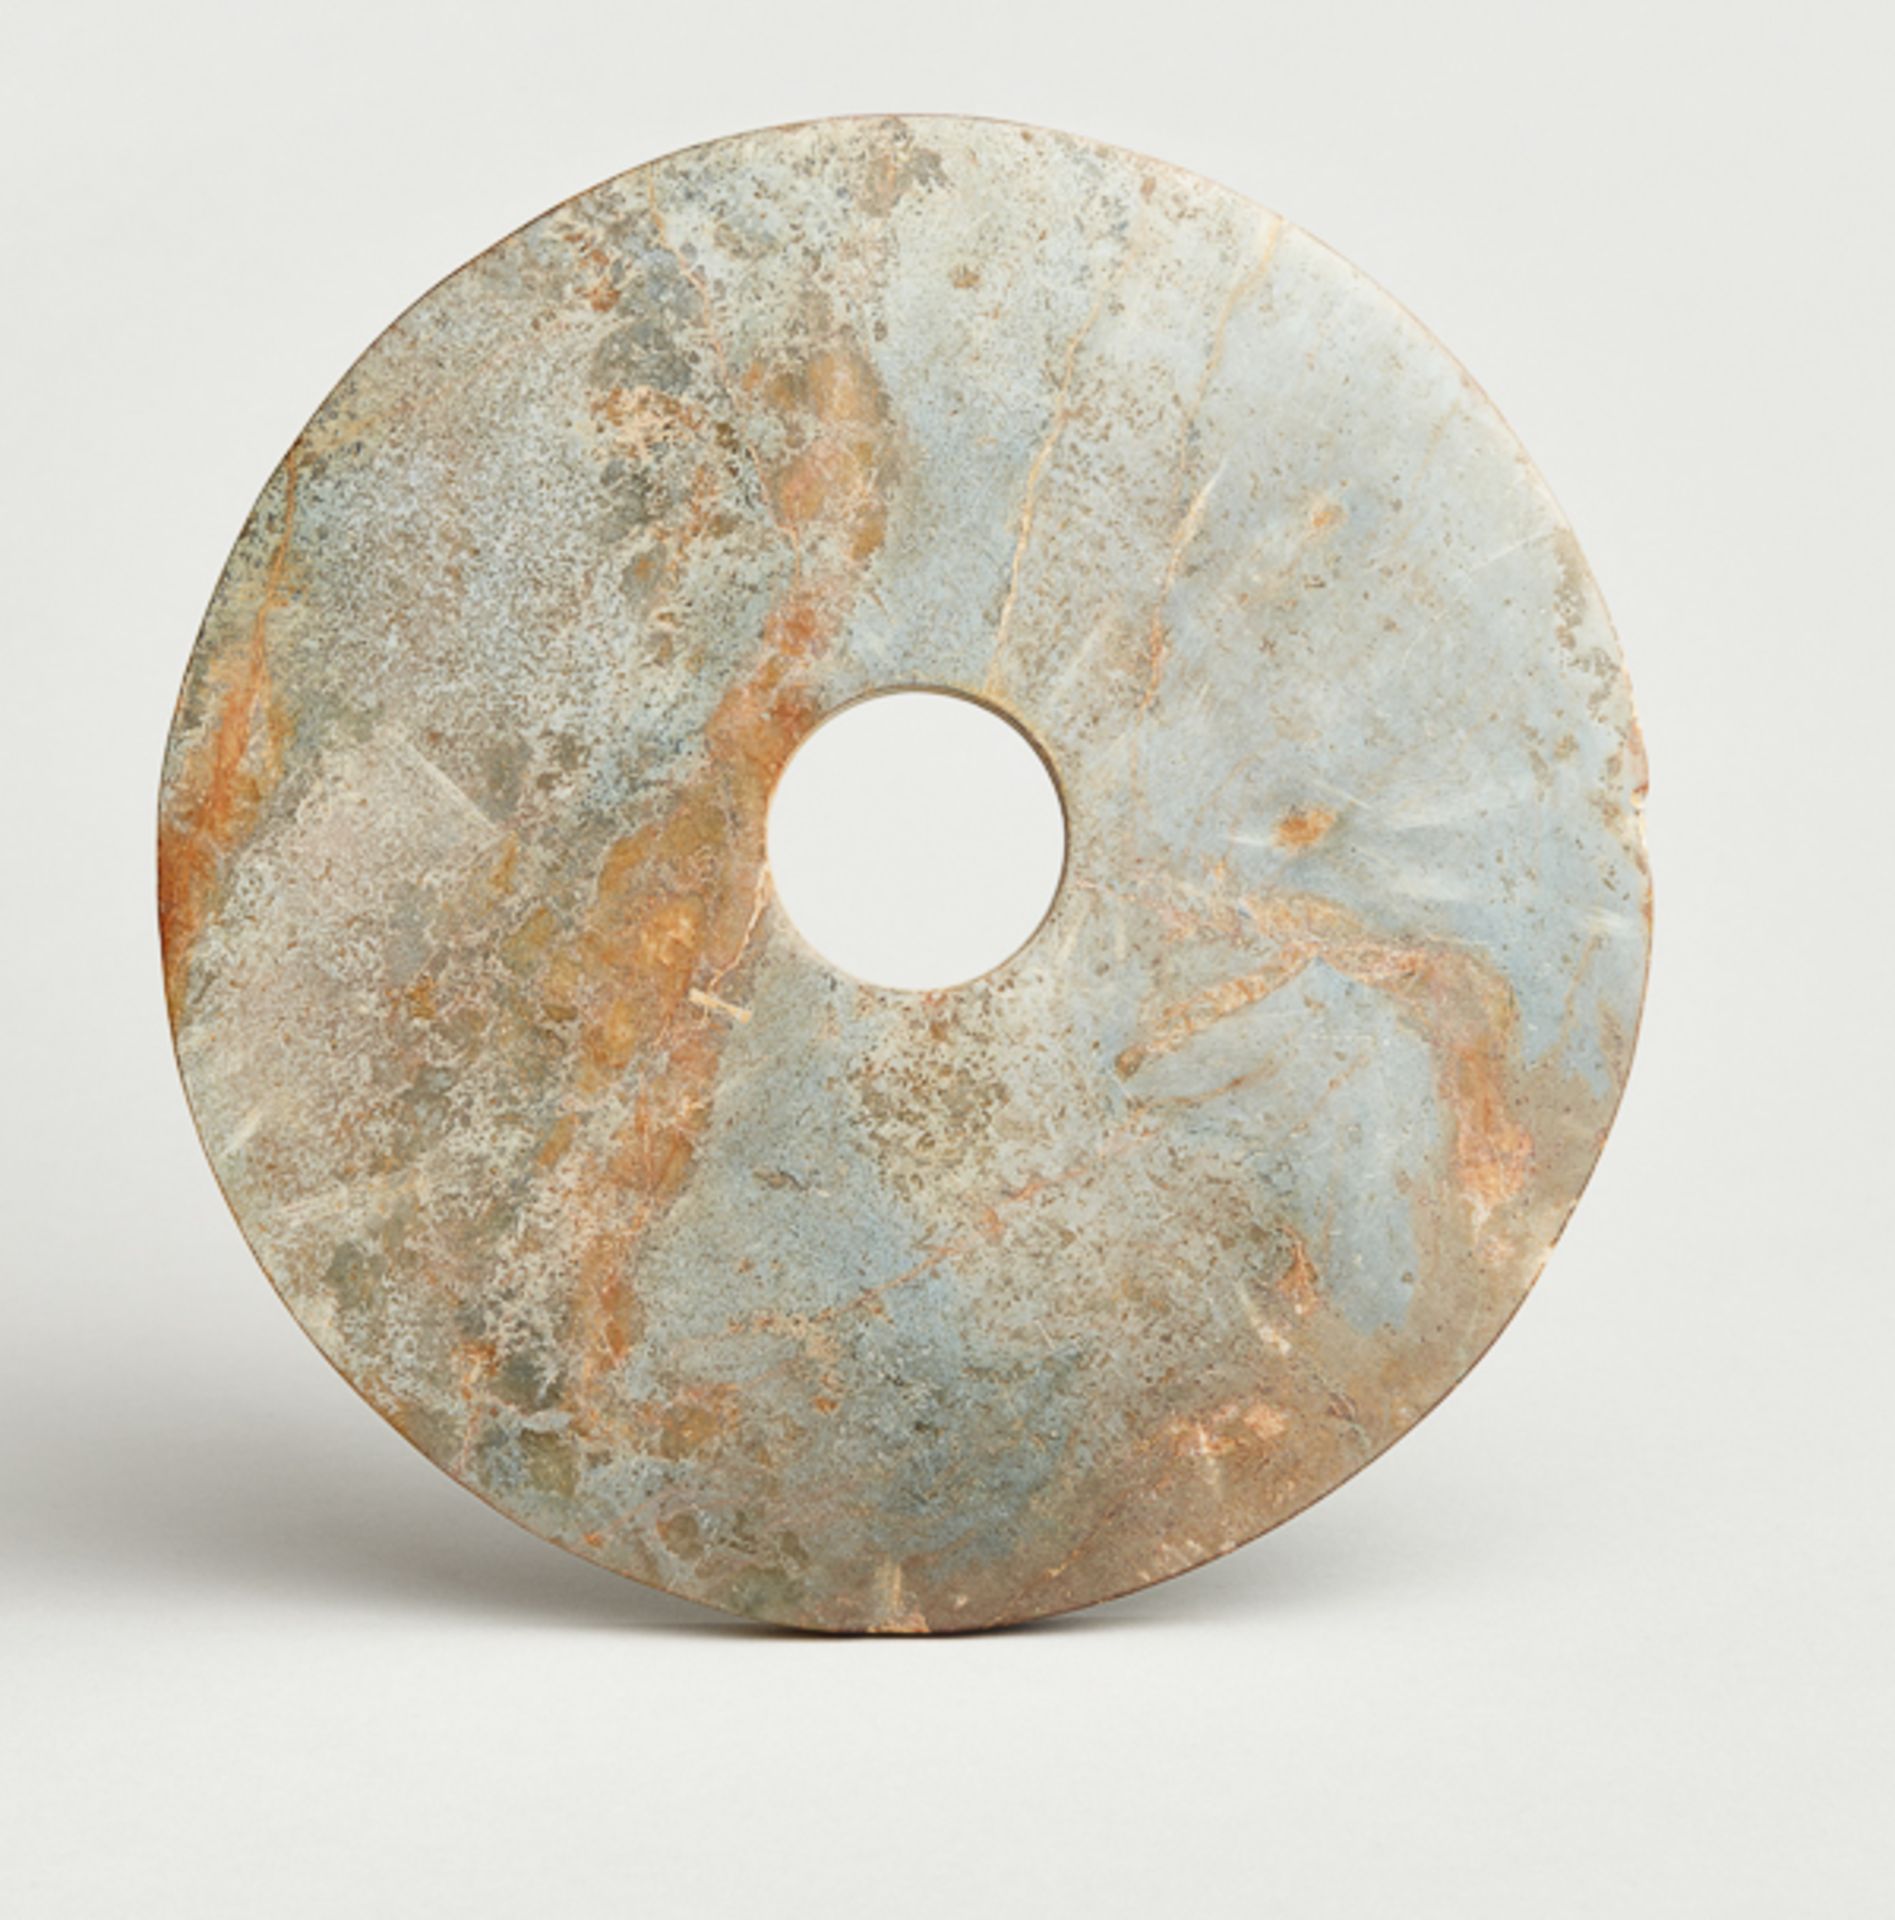 GROSSE SCHEIBE BI Jade. China, vermutl. neolithische Liangzhu-Kultur (ca. 3300 - 2200 vor) - Image 2 of 4